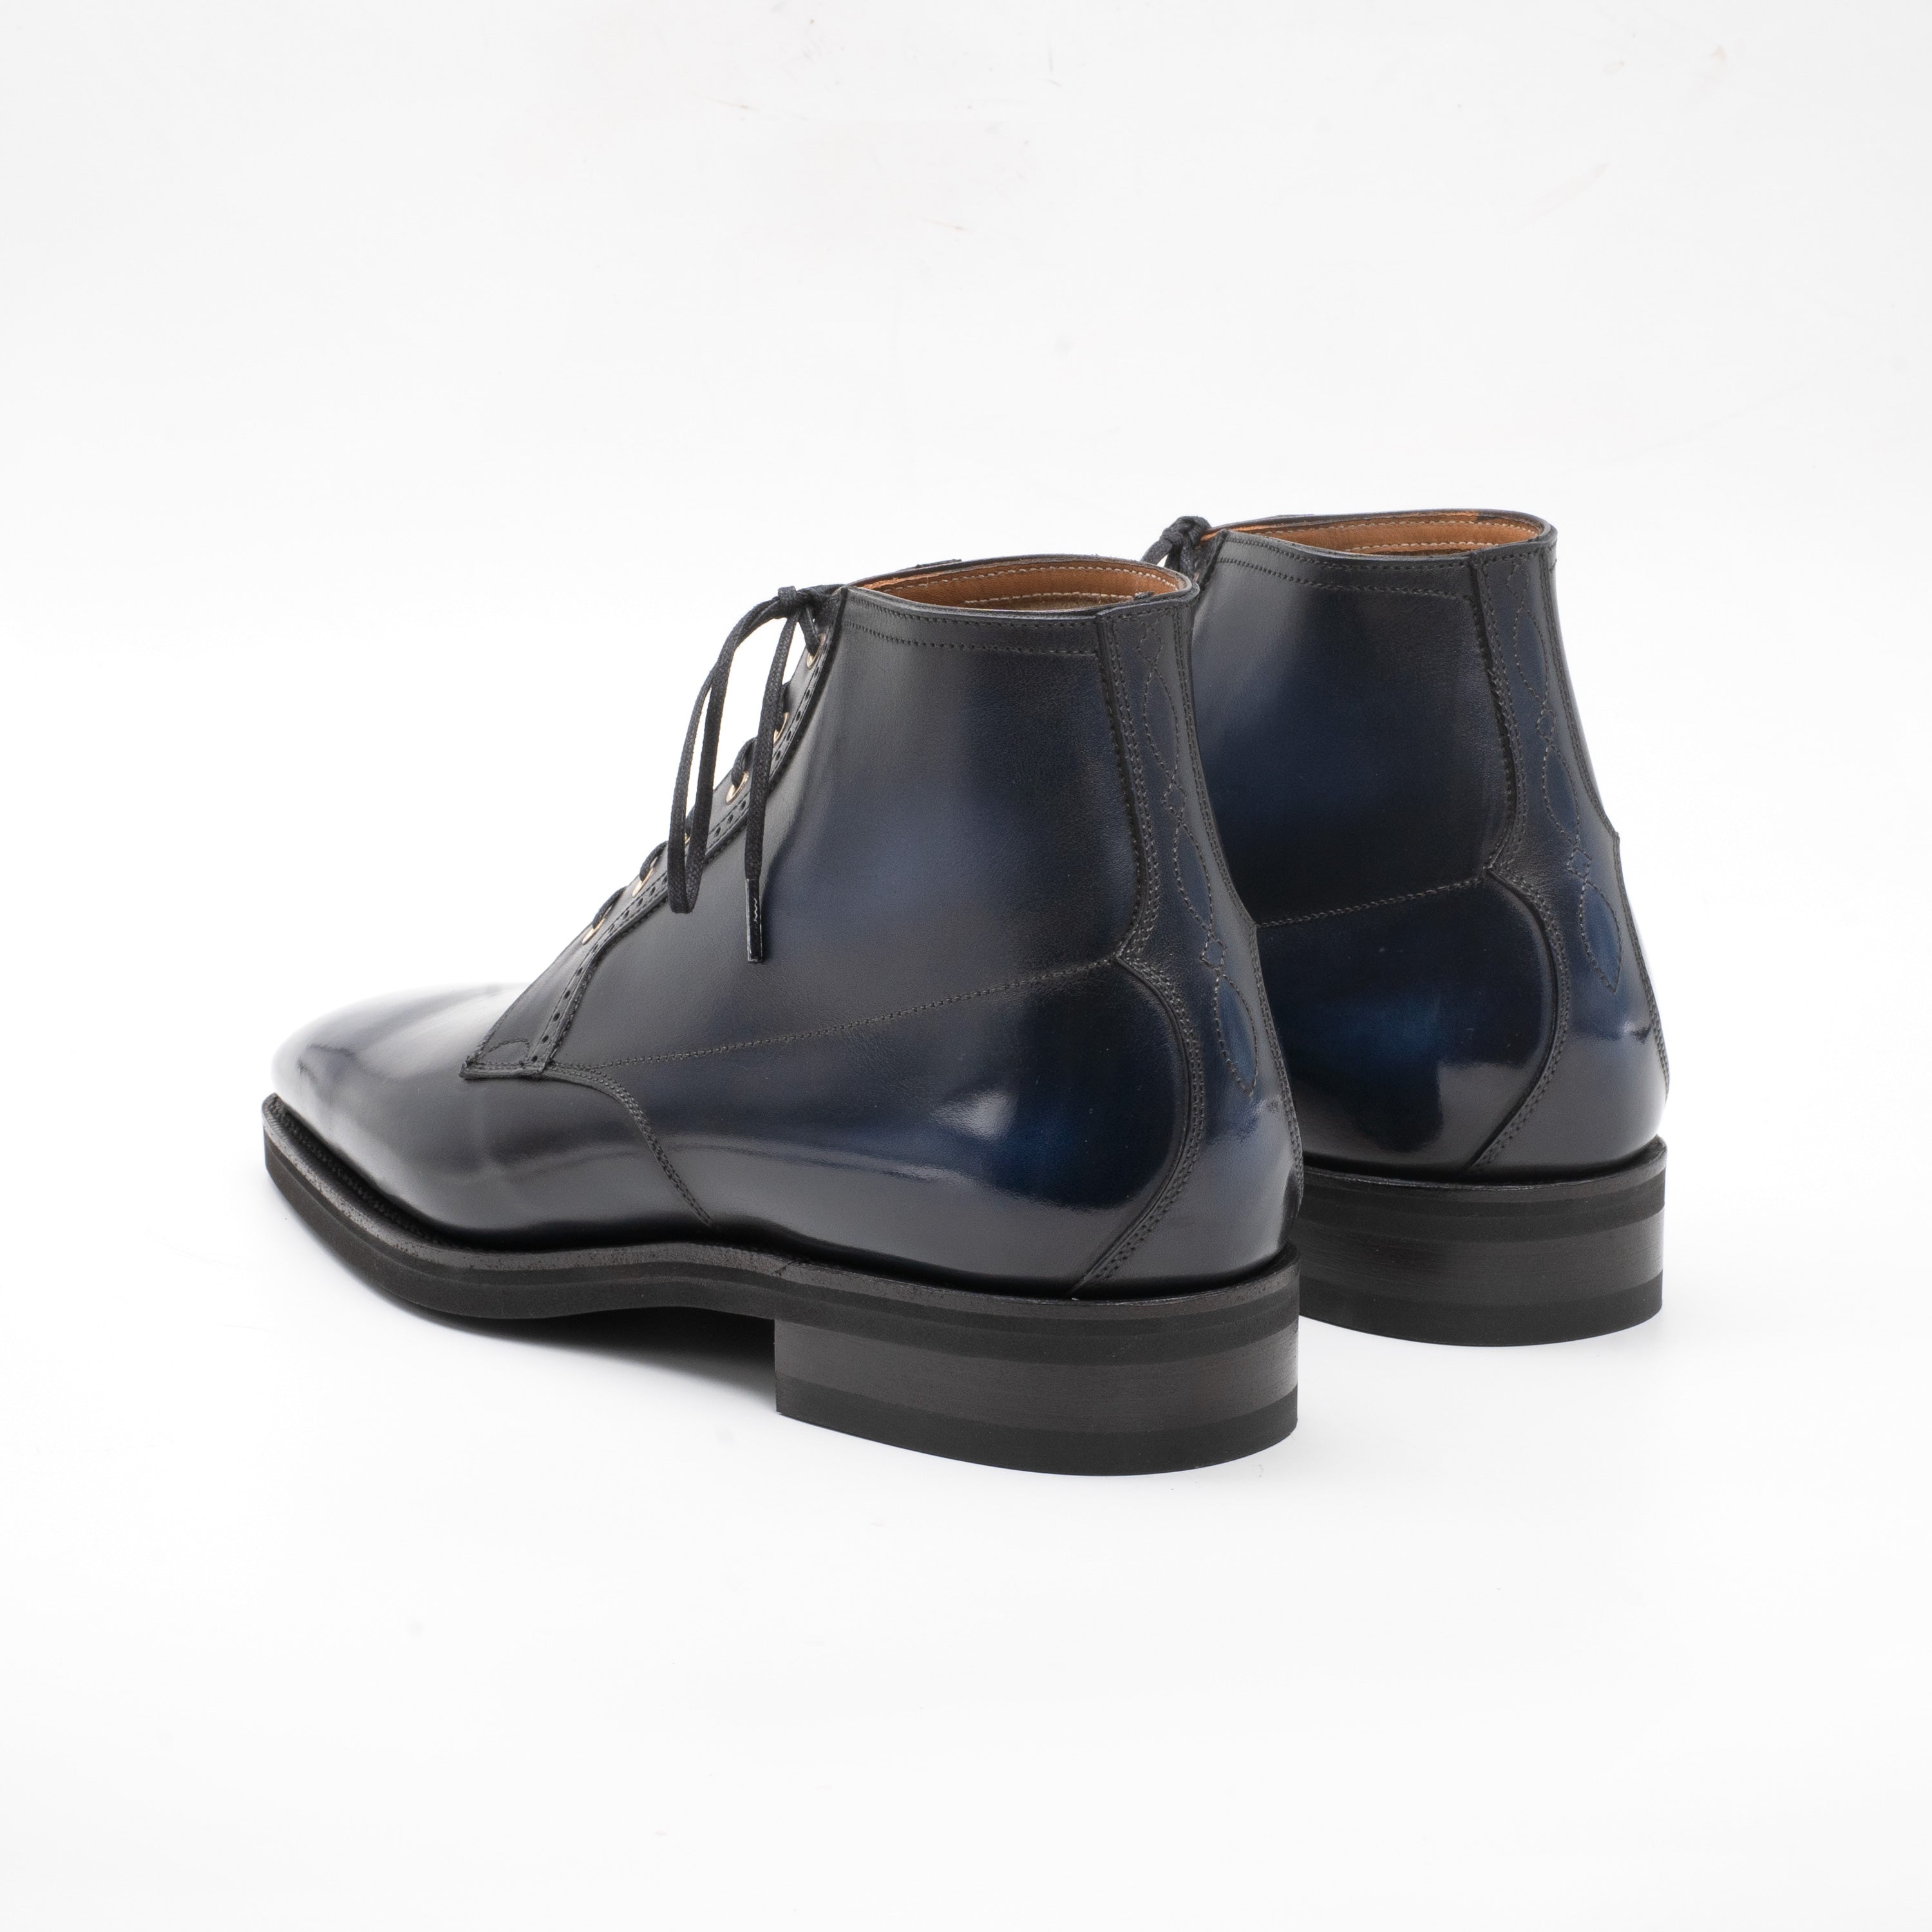 Kerouac Derby Boot by Norman Vilalta Bespoke Shoemakers of Barcelona